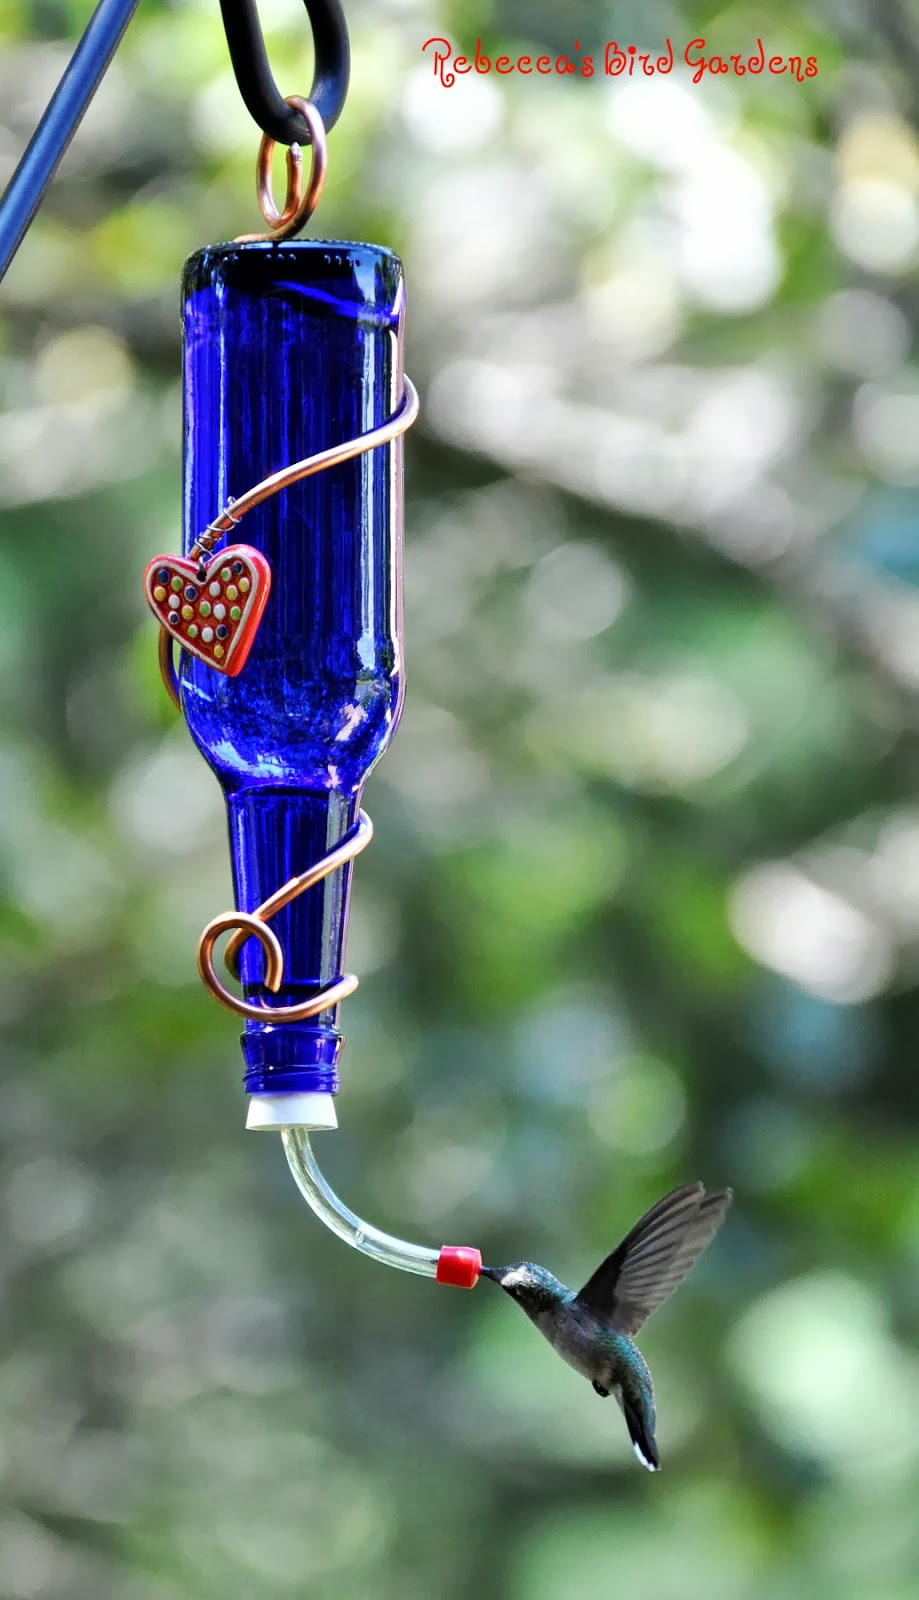 Best ideas about DIY Bird Feeder
. Save or Pin Rebecca s Bird Gardens Blog DIY Fruit and Hummingbird Feeders Now.